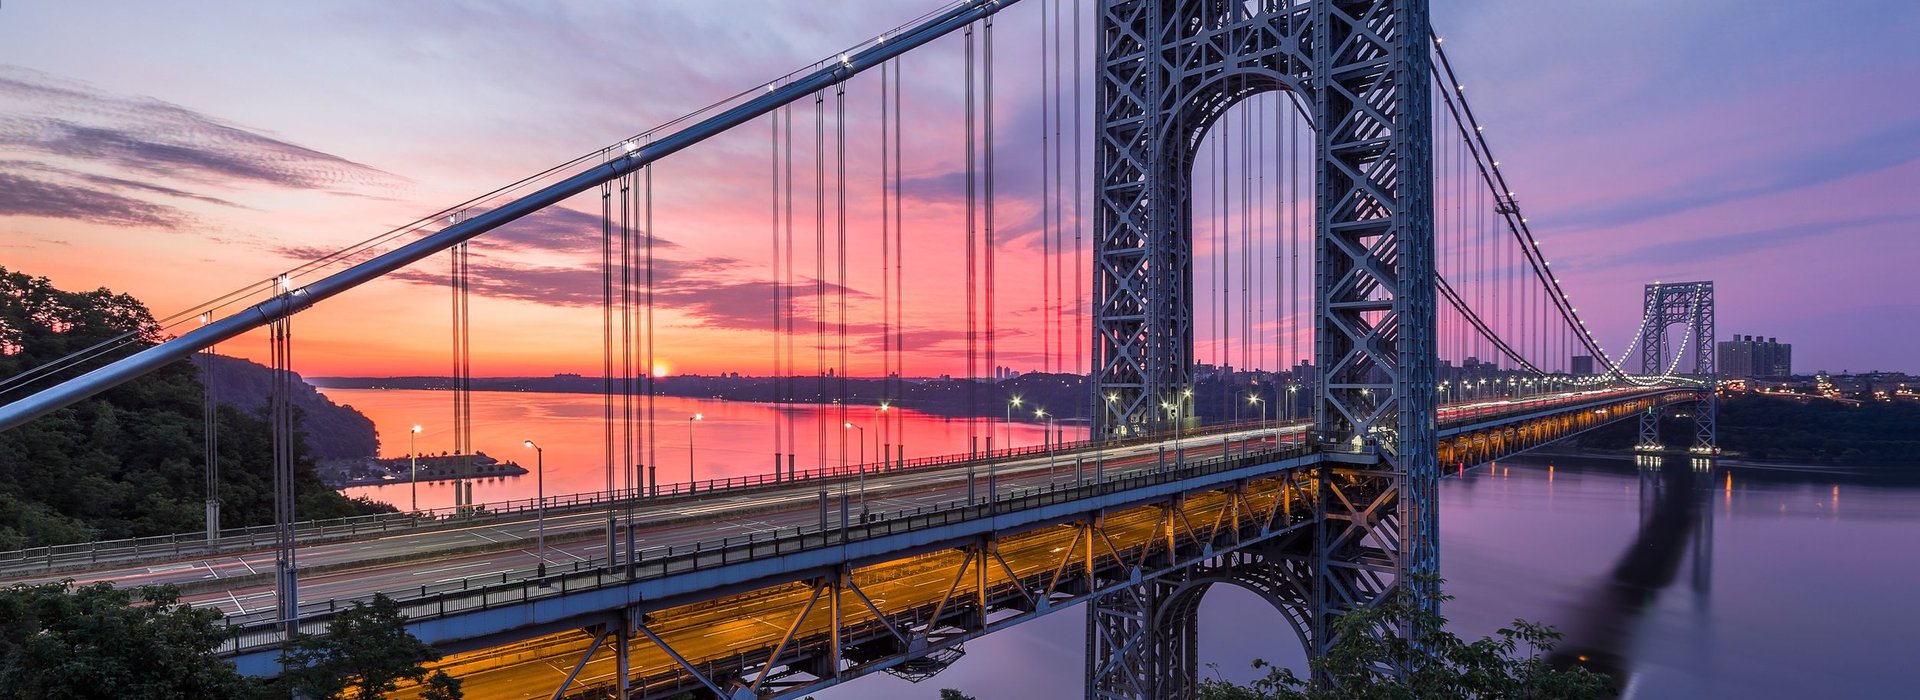 George Washington Bridge photo at sunset. The George Washington Bridge is located in Bergen County, New Jersey